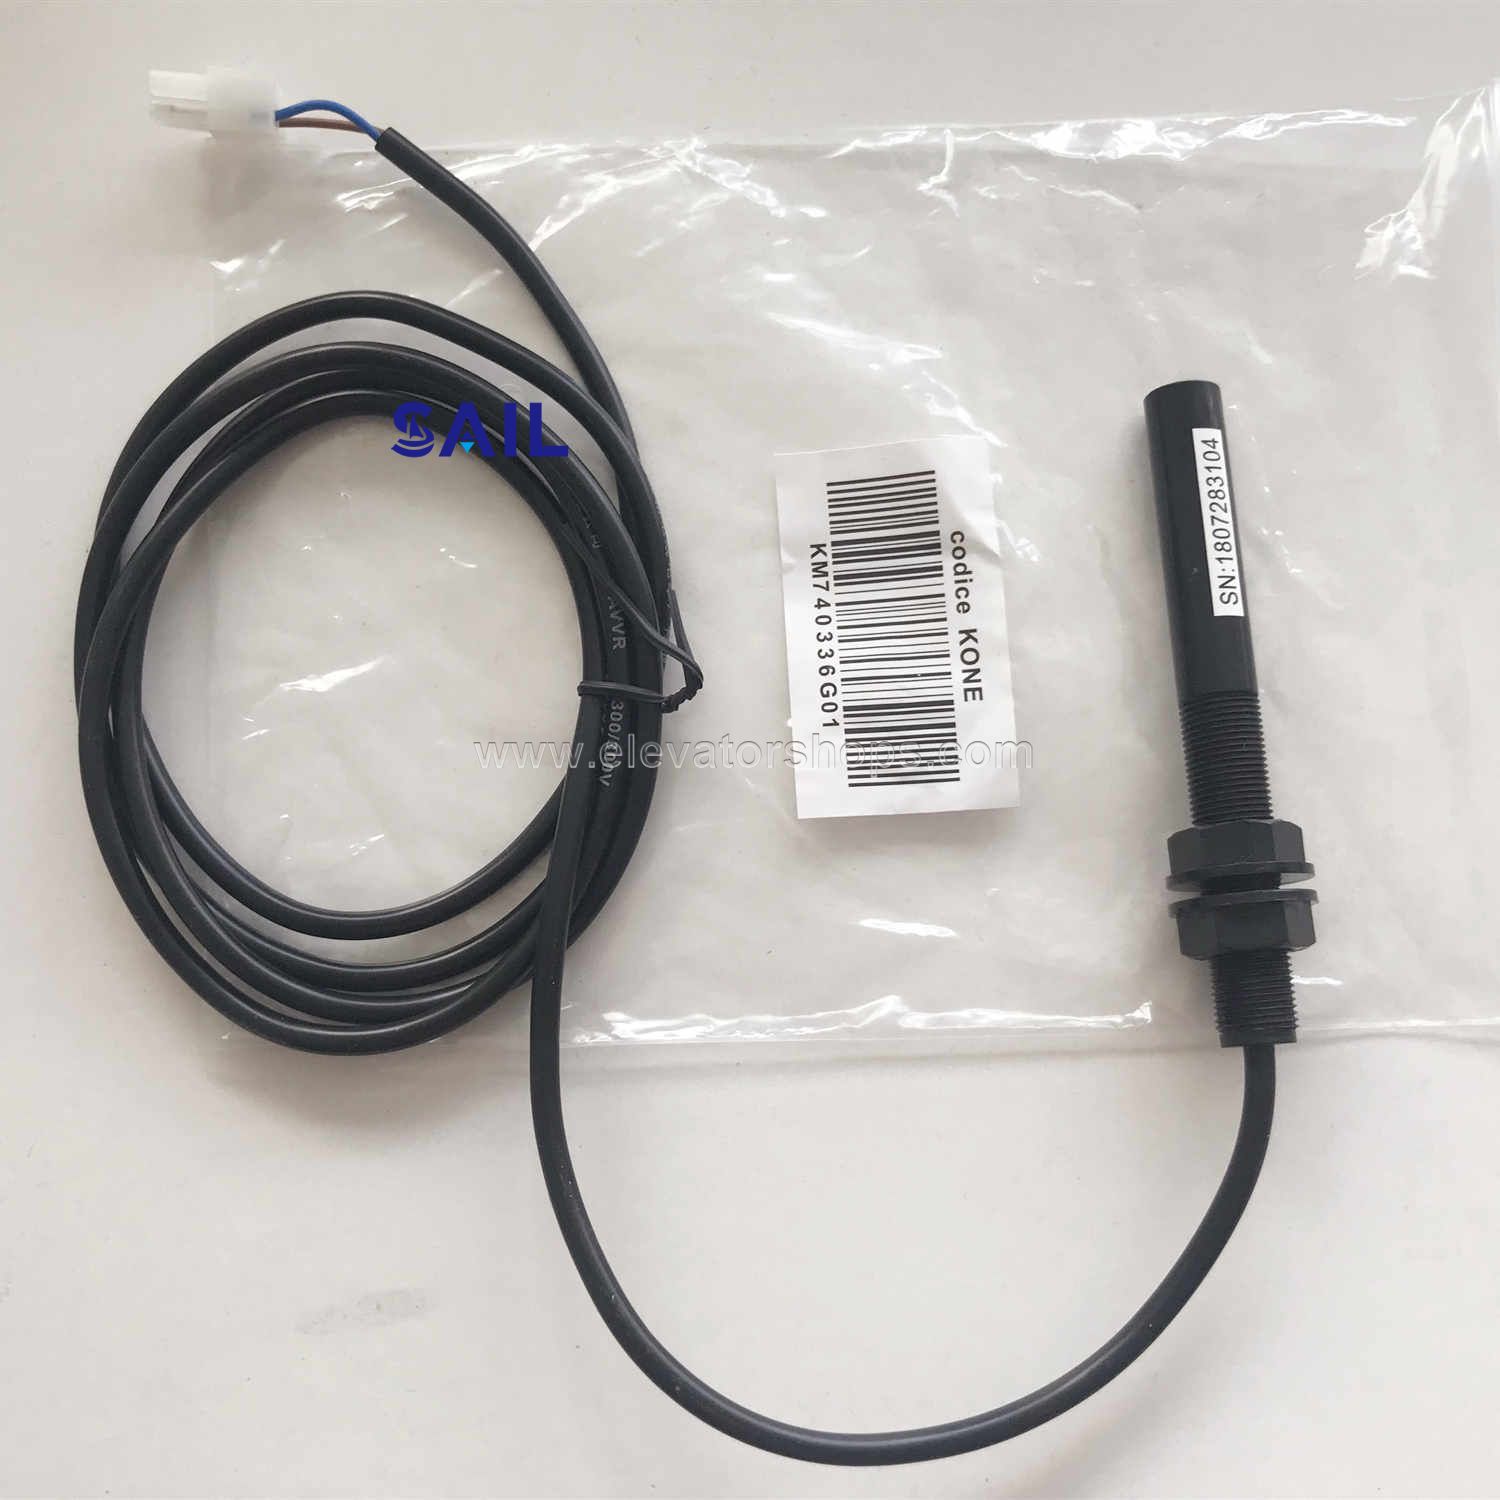 Kone sensory switch Sensor KM740336G01